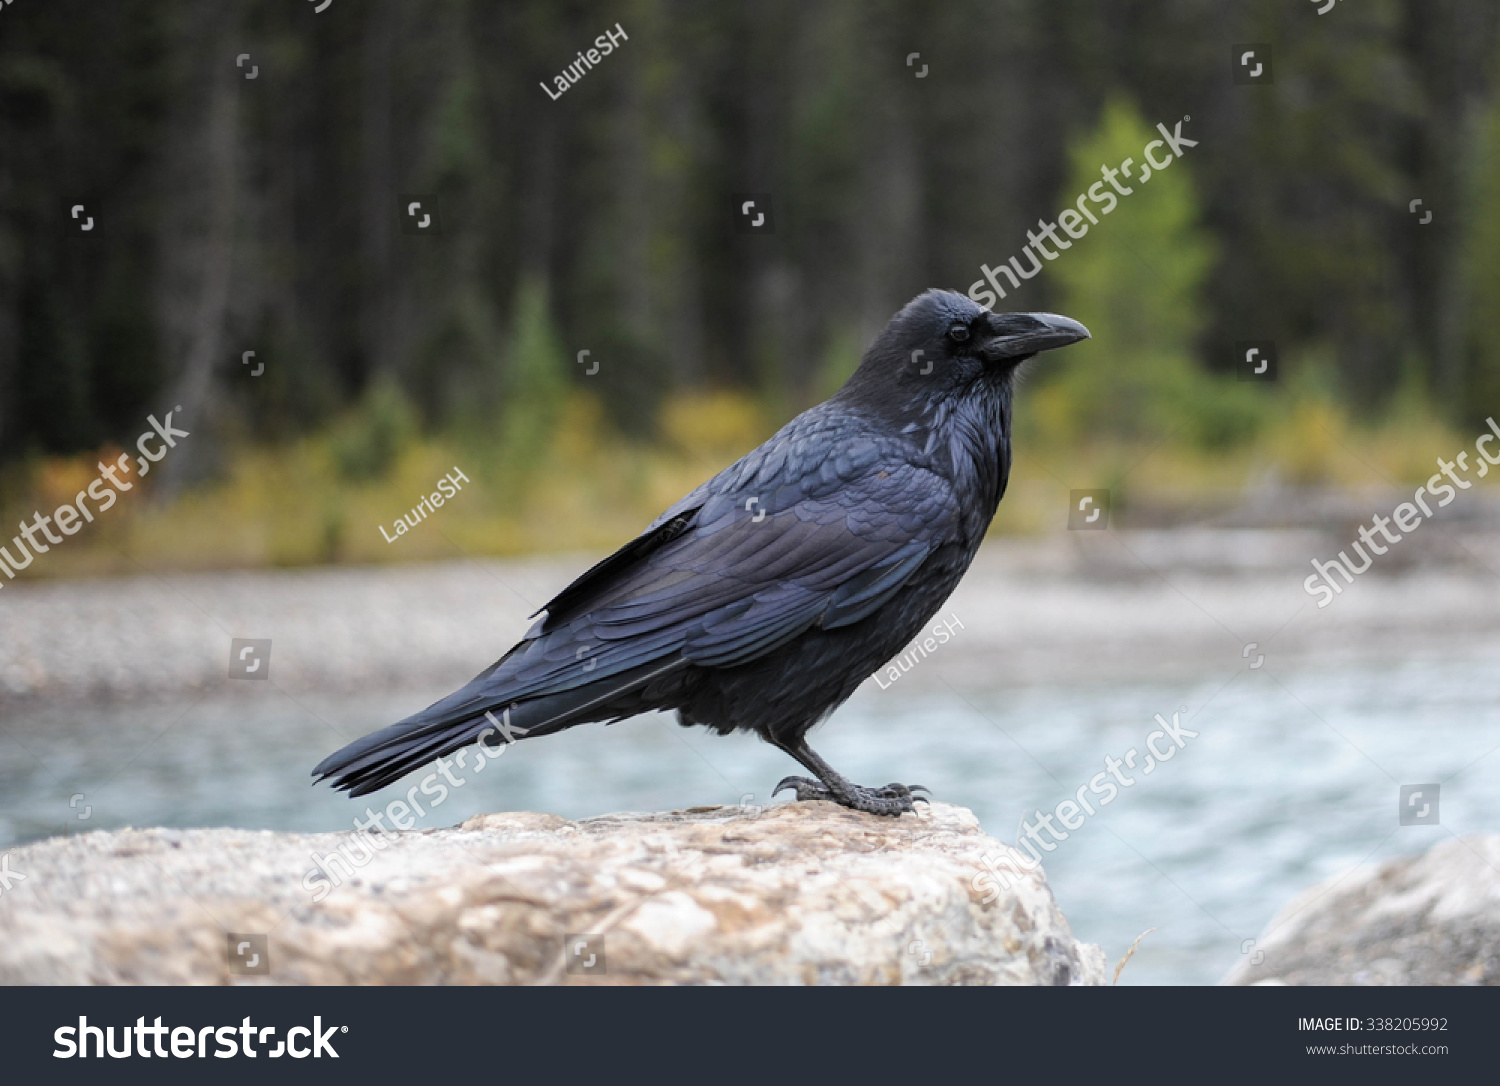 Black Raven By Mountain River Stock Photo (Edit Now) 338205992